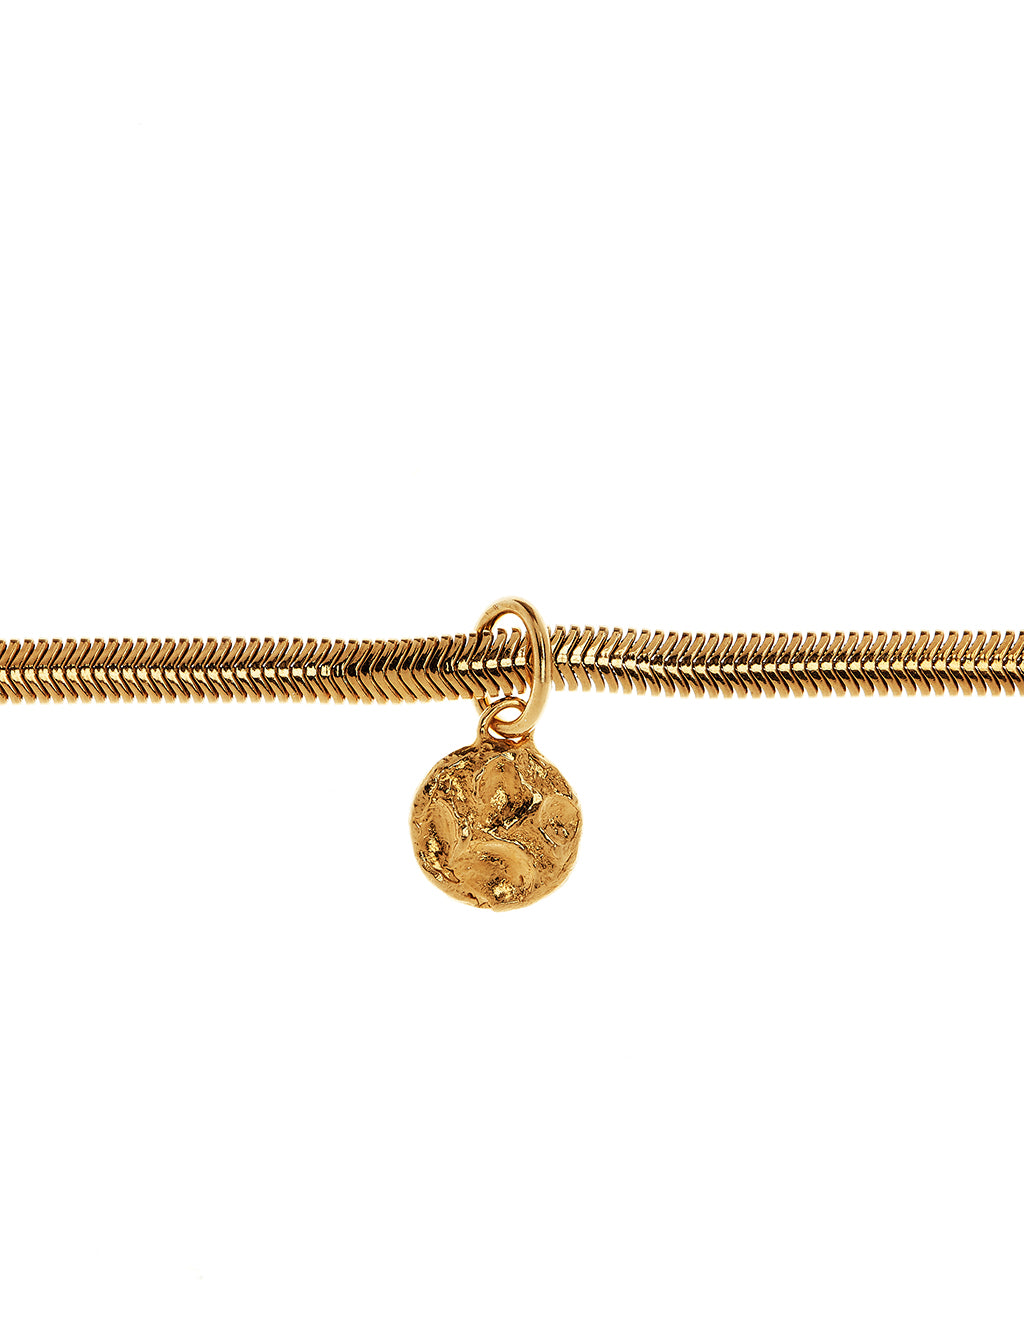 Close up of textured gold vermeil pendant